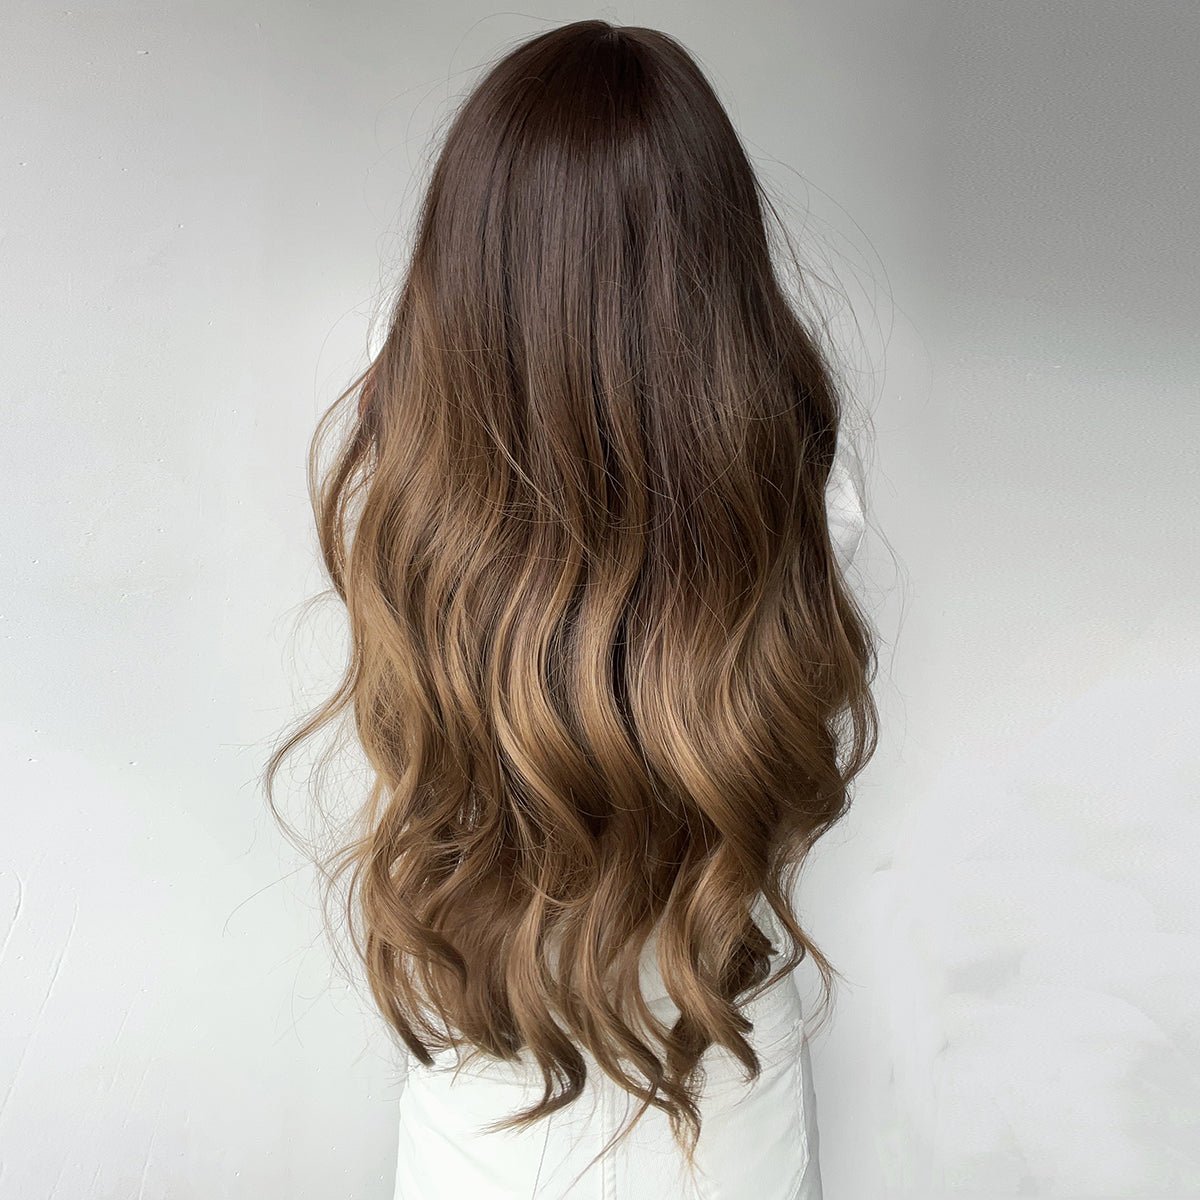 20-inch | Dark Brown | Straight Hair With Hair Bangs | SM7237 - TapLike